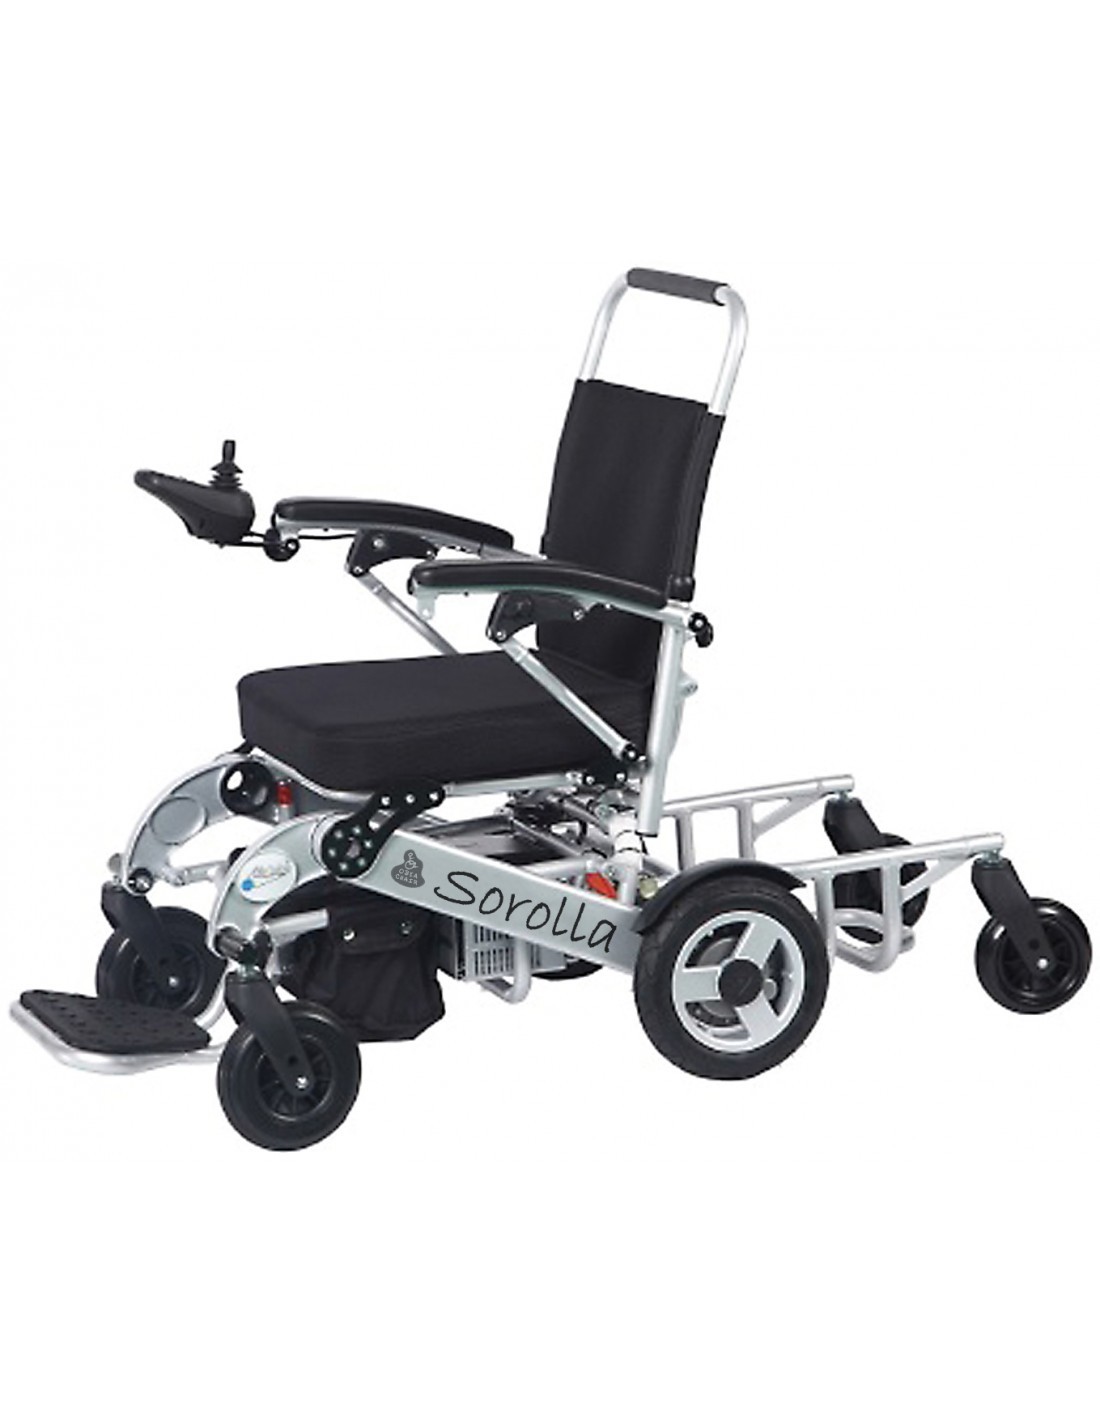 Trailer for Sorolla wheelchair